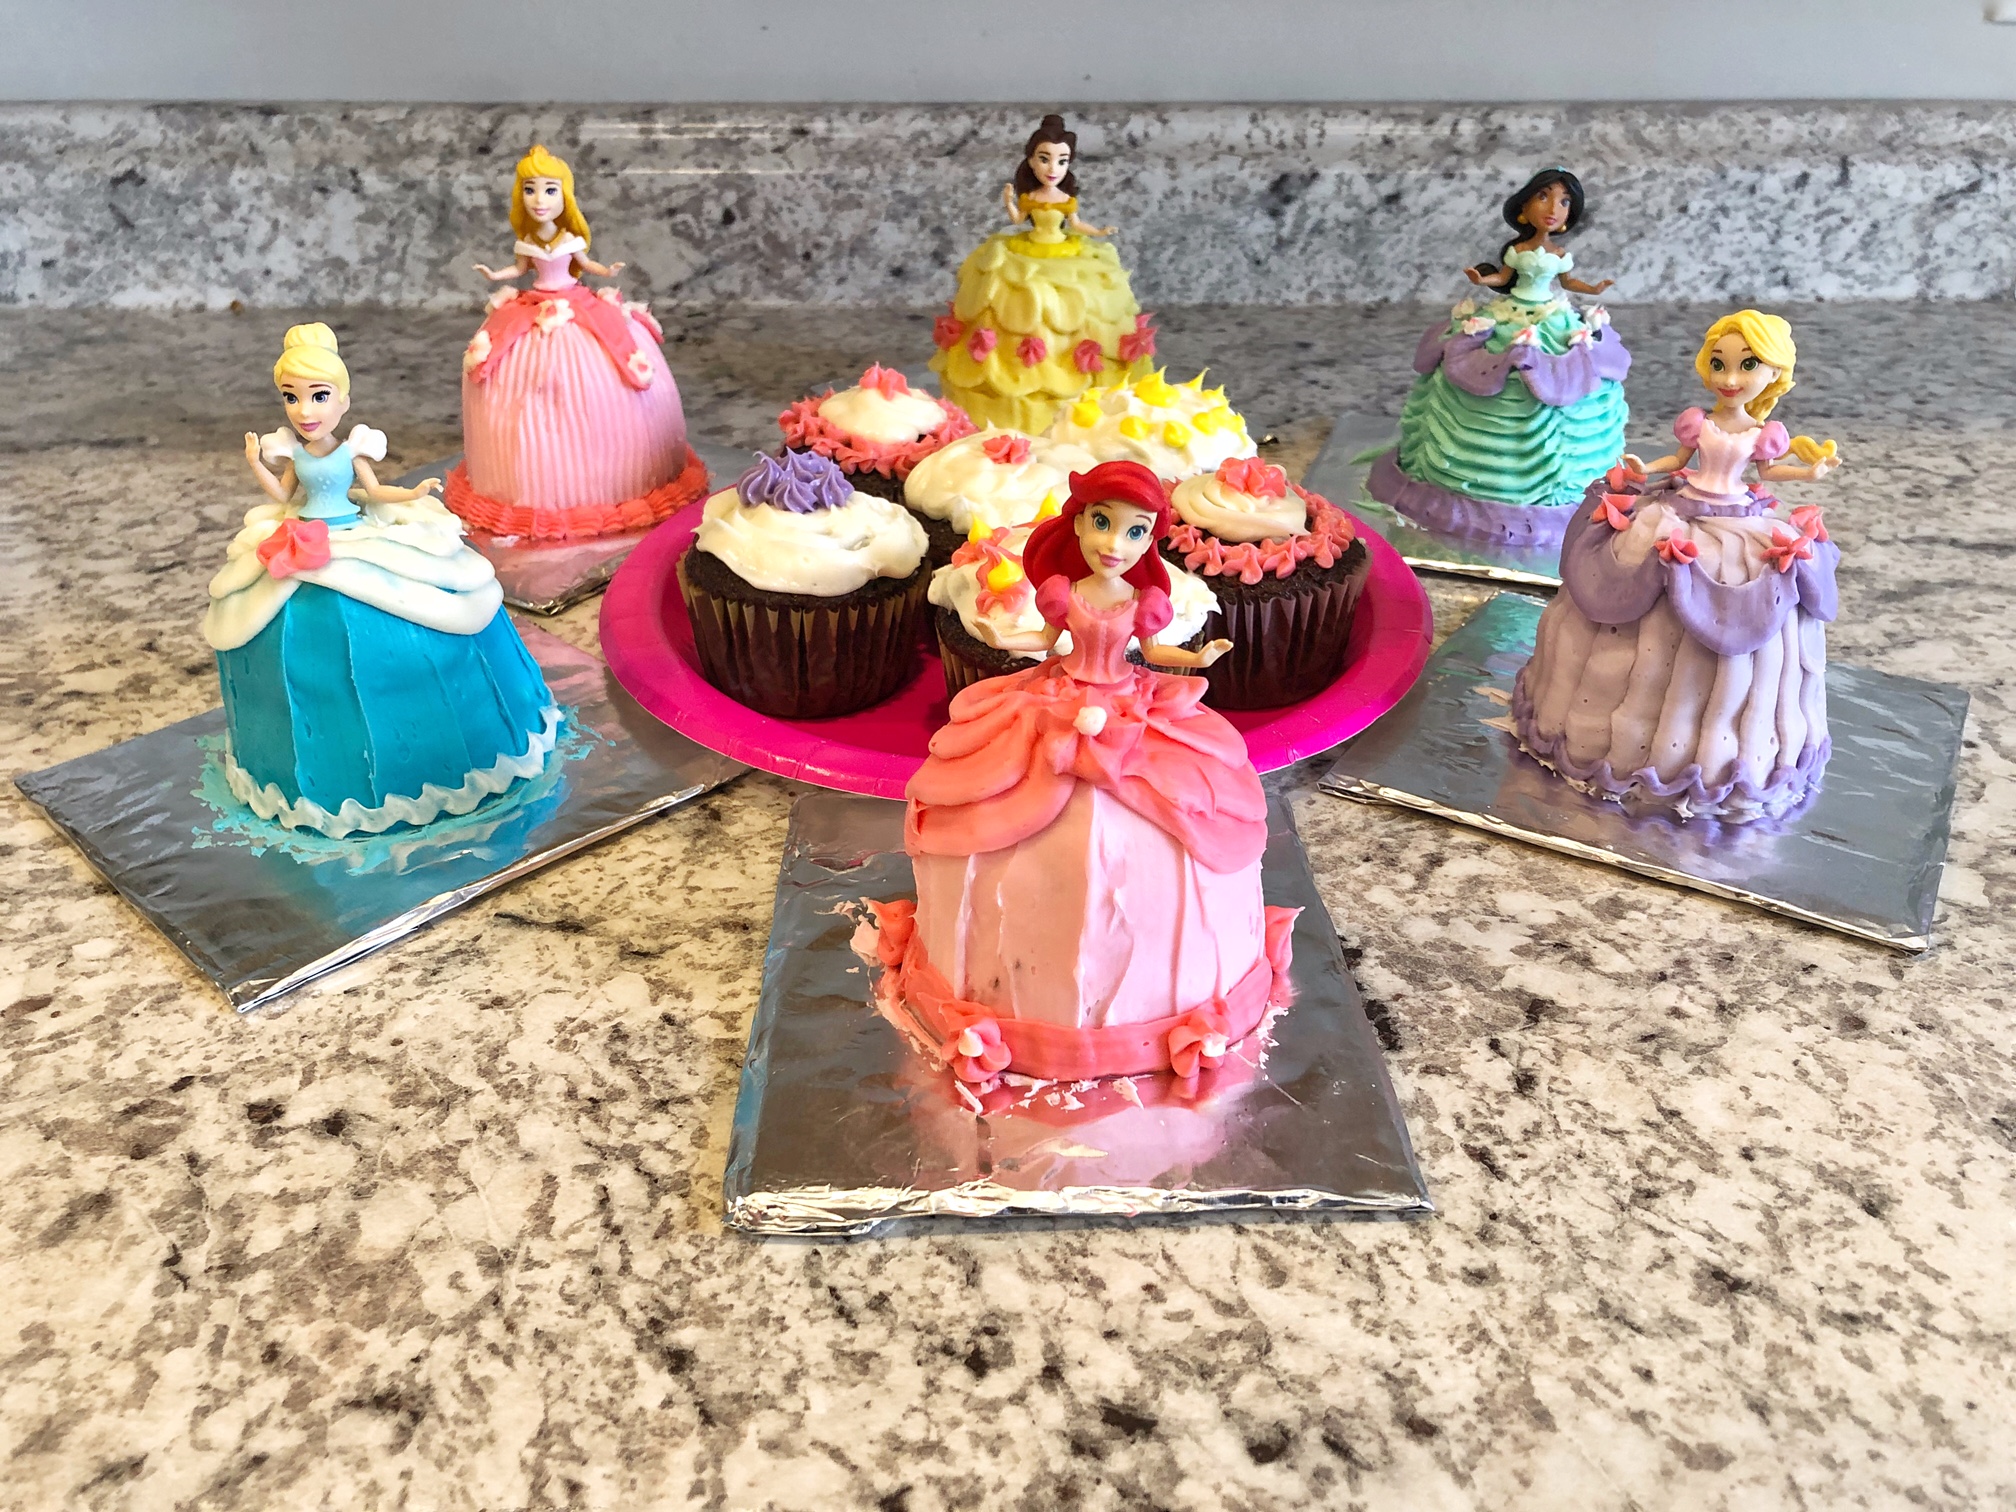 Disney Princess Cupcakes: Special Birthday Cake for Daughter’s 5th Birthday!